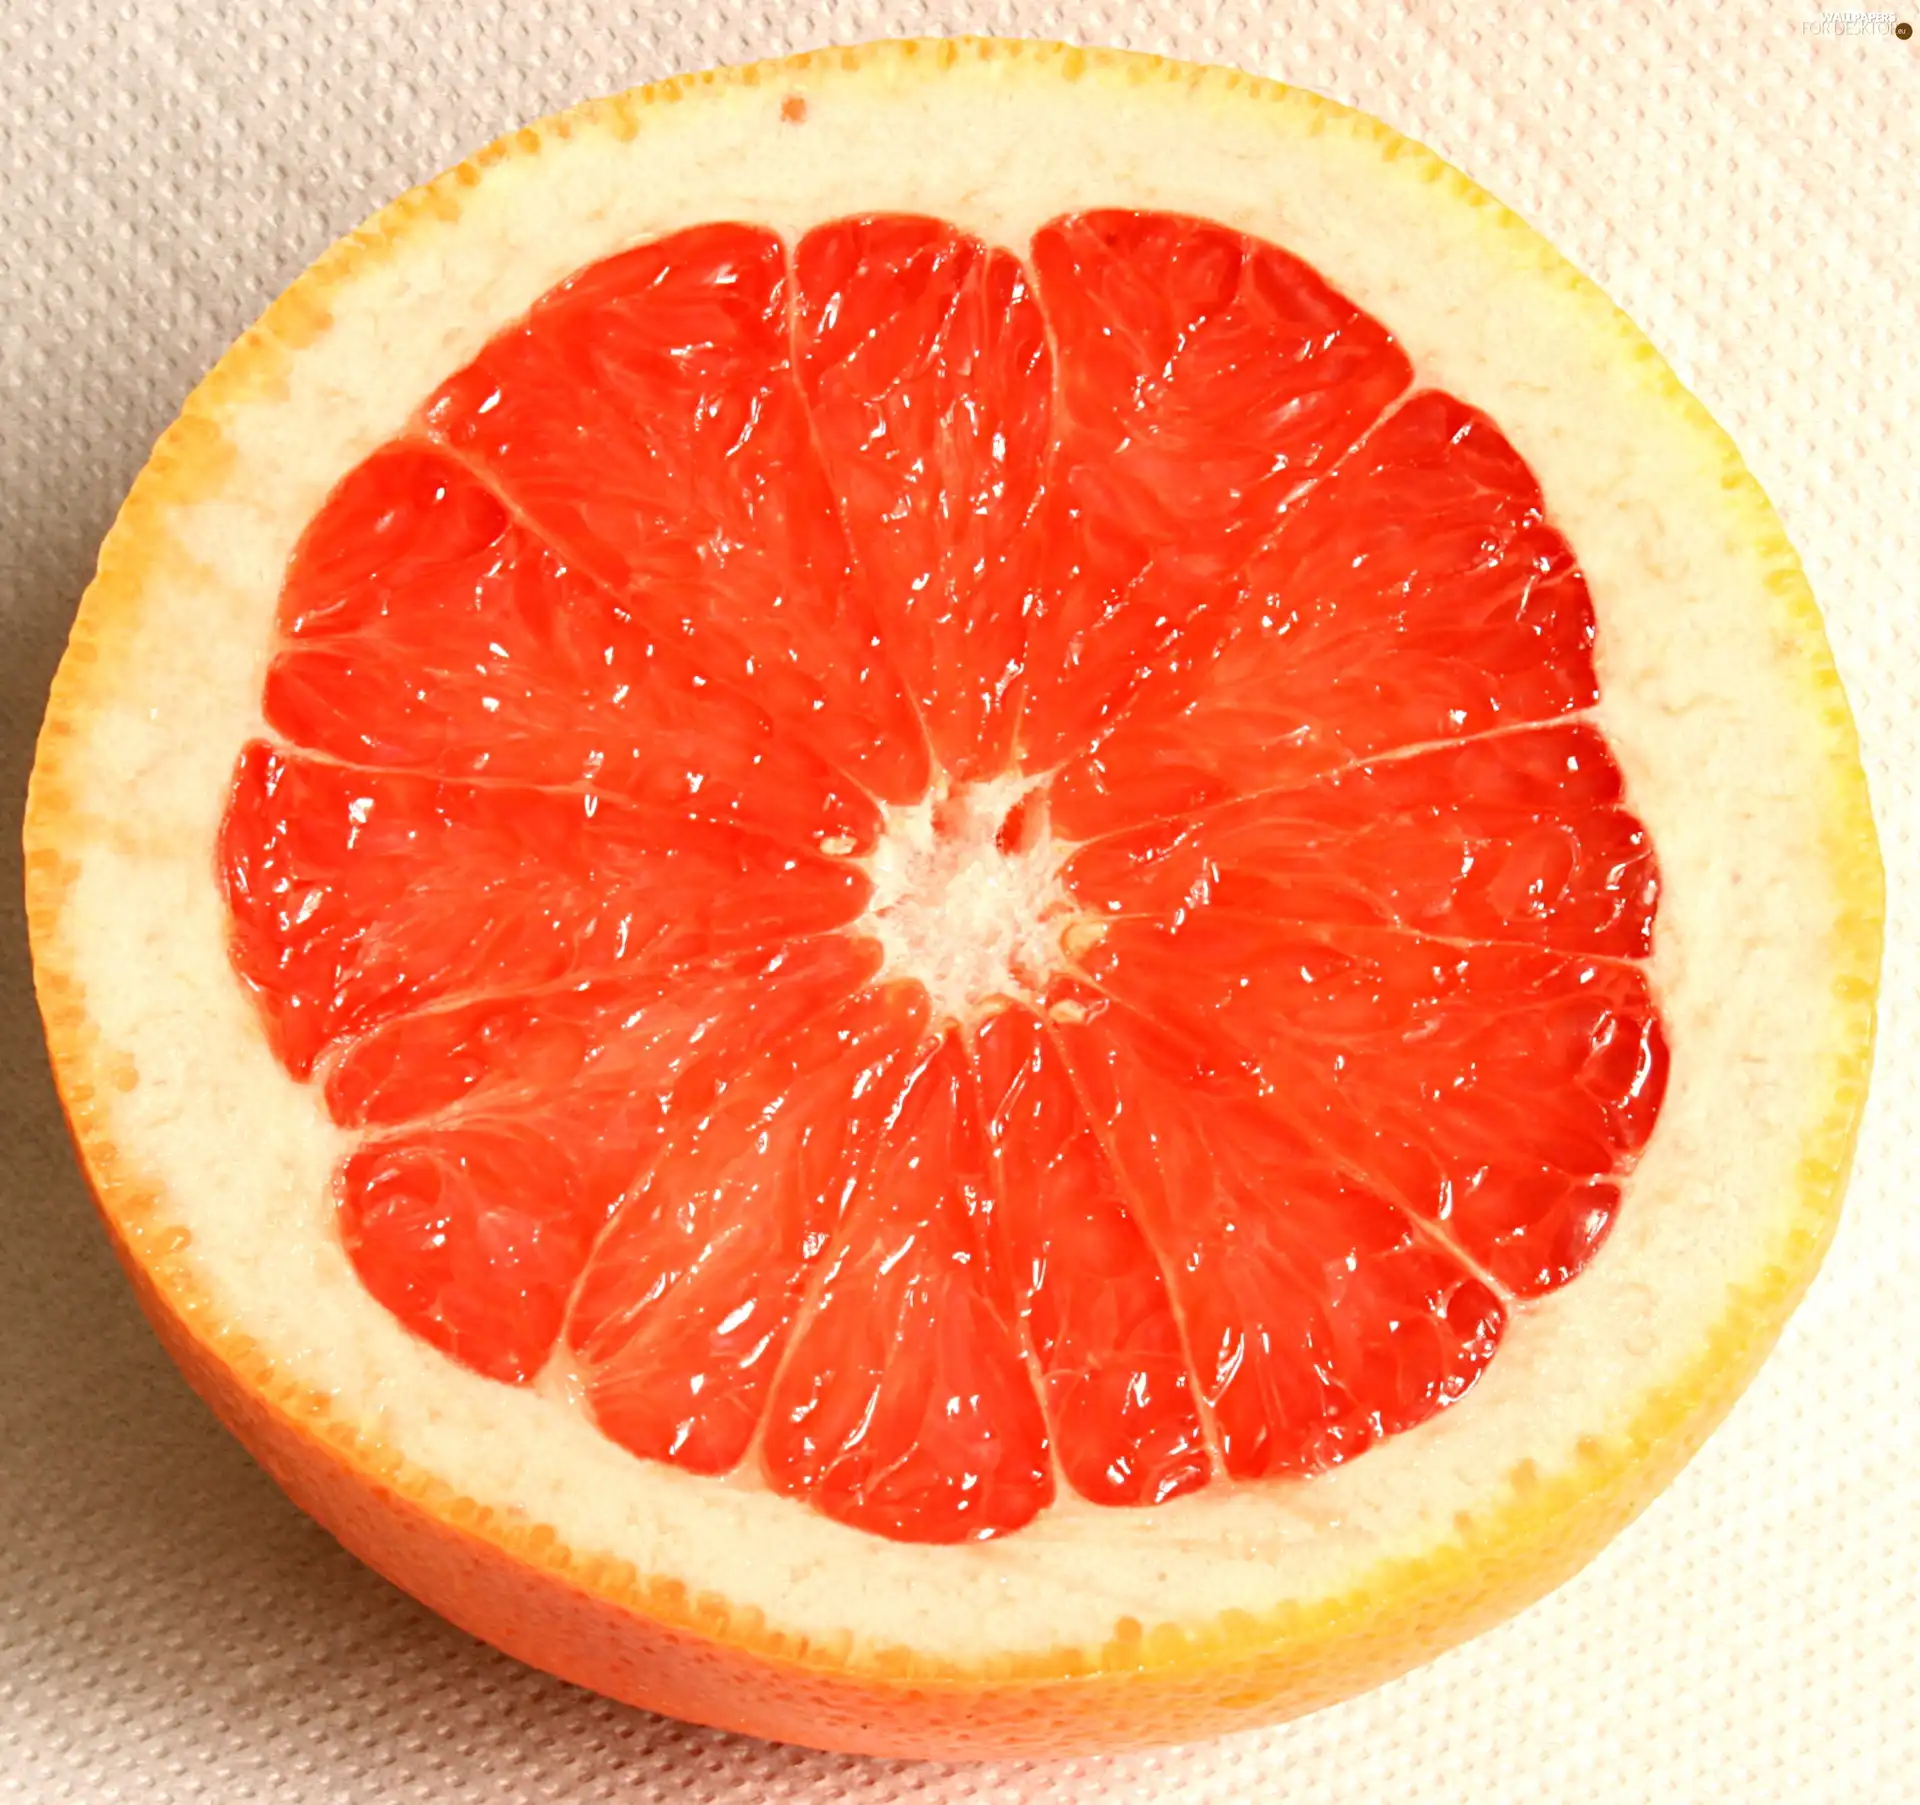 half, red grapefruit